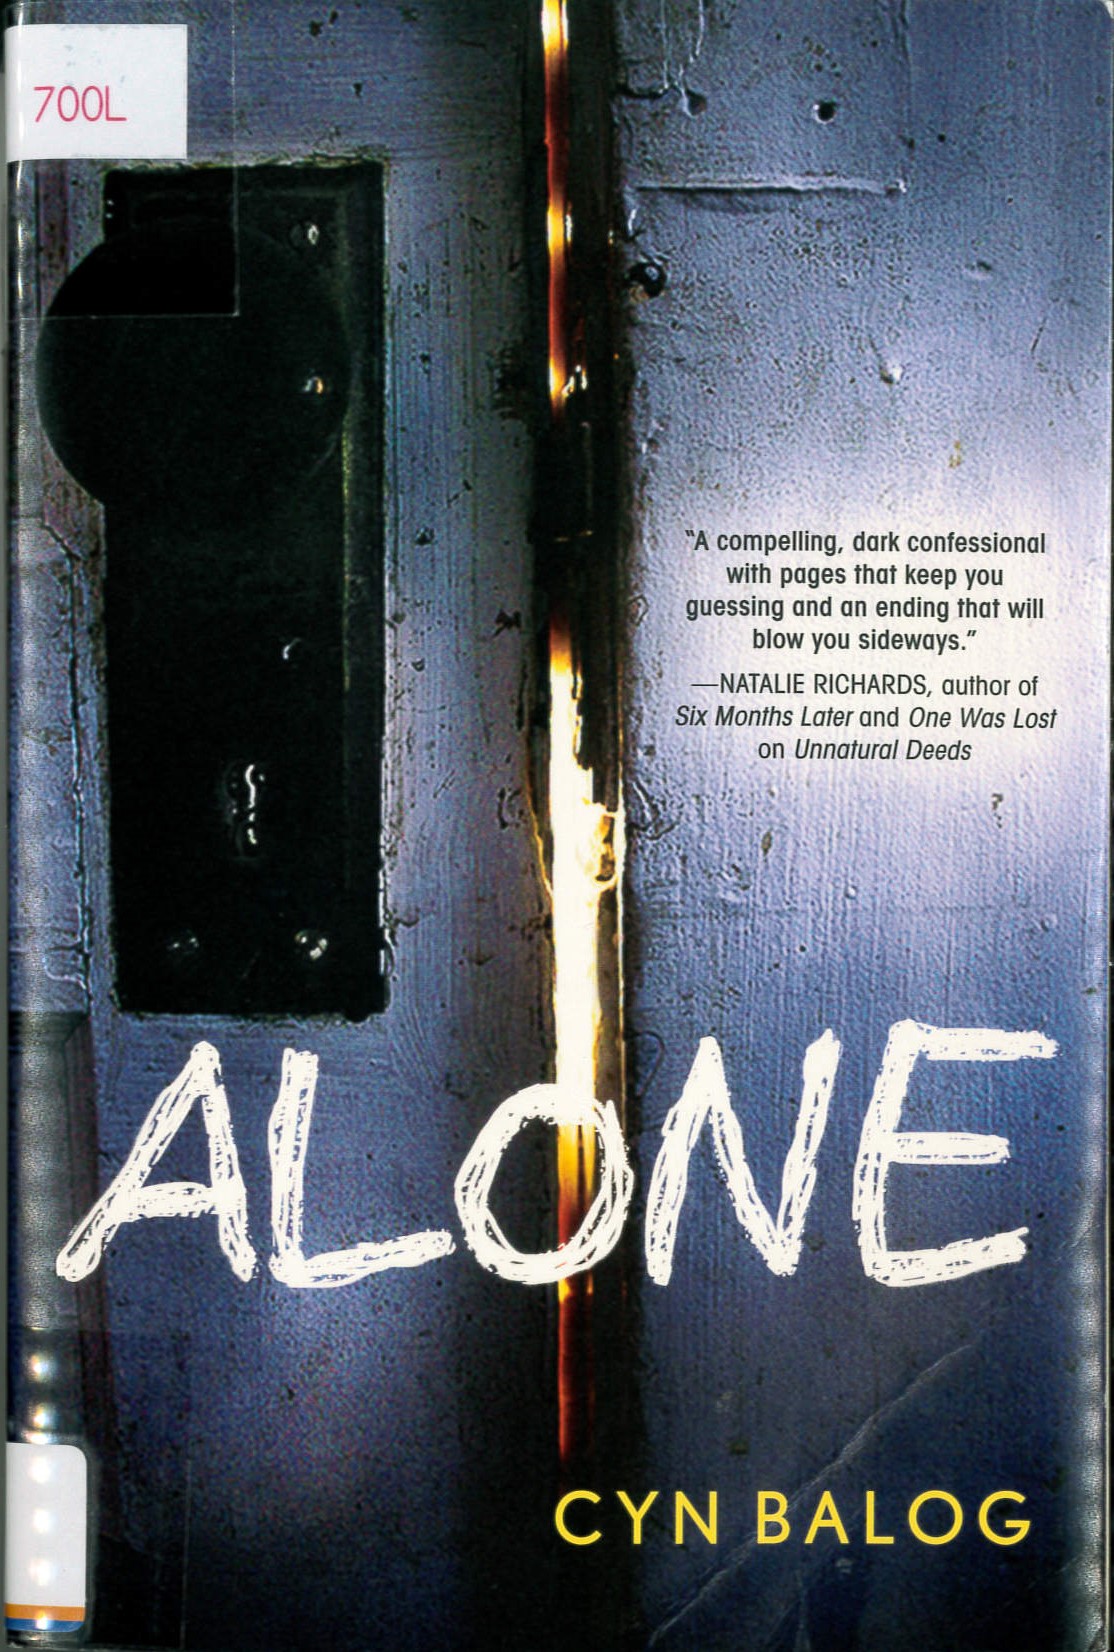 Alone /